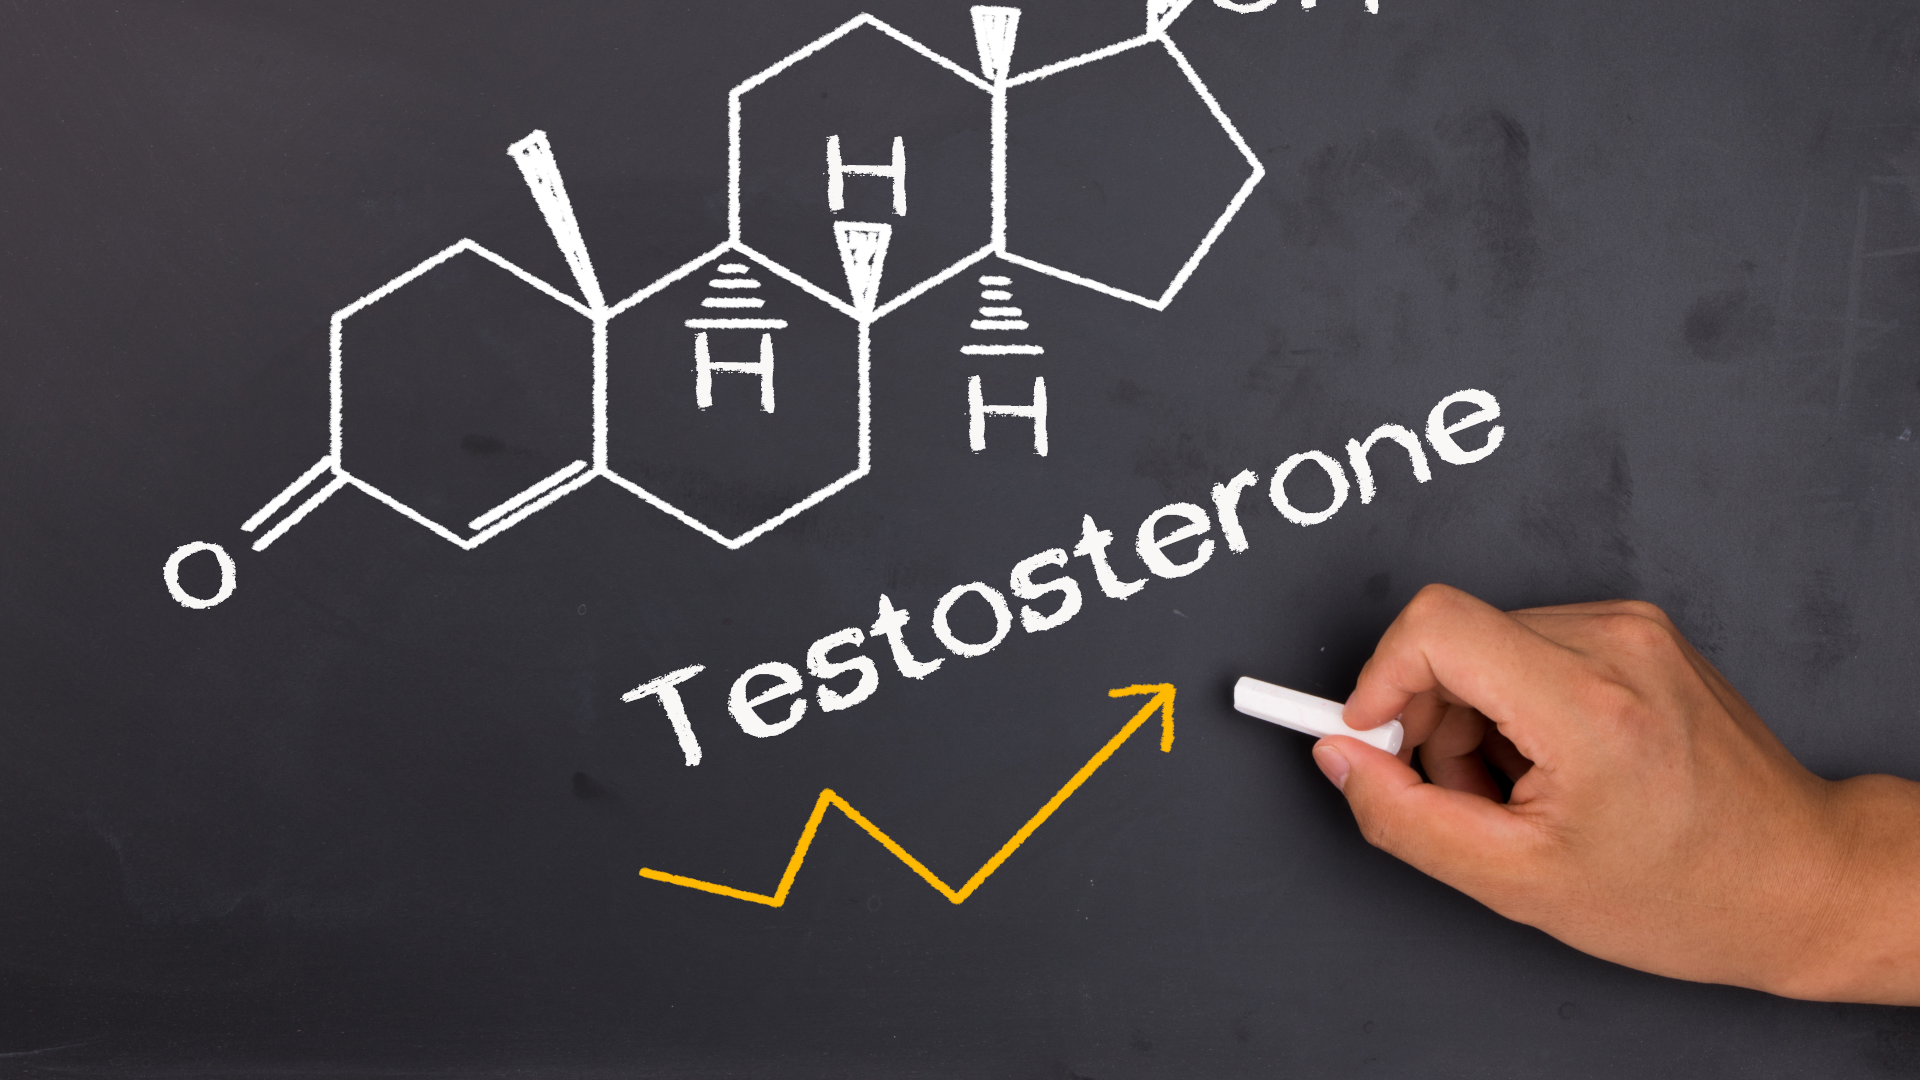 Ultimate testosterone guide